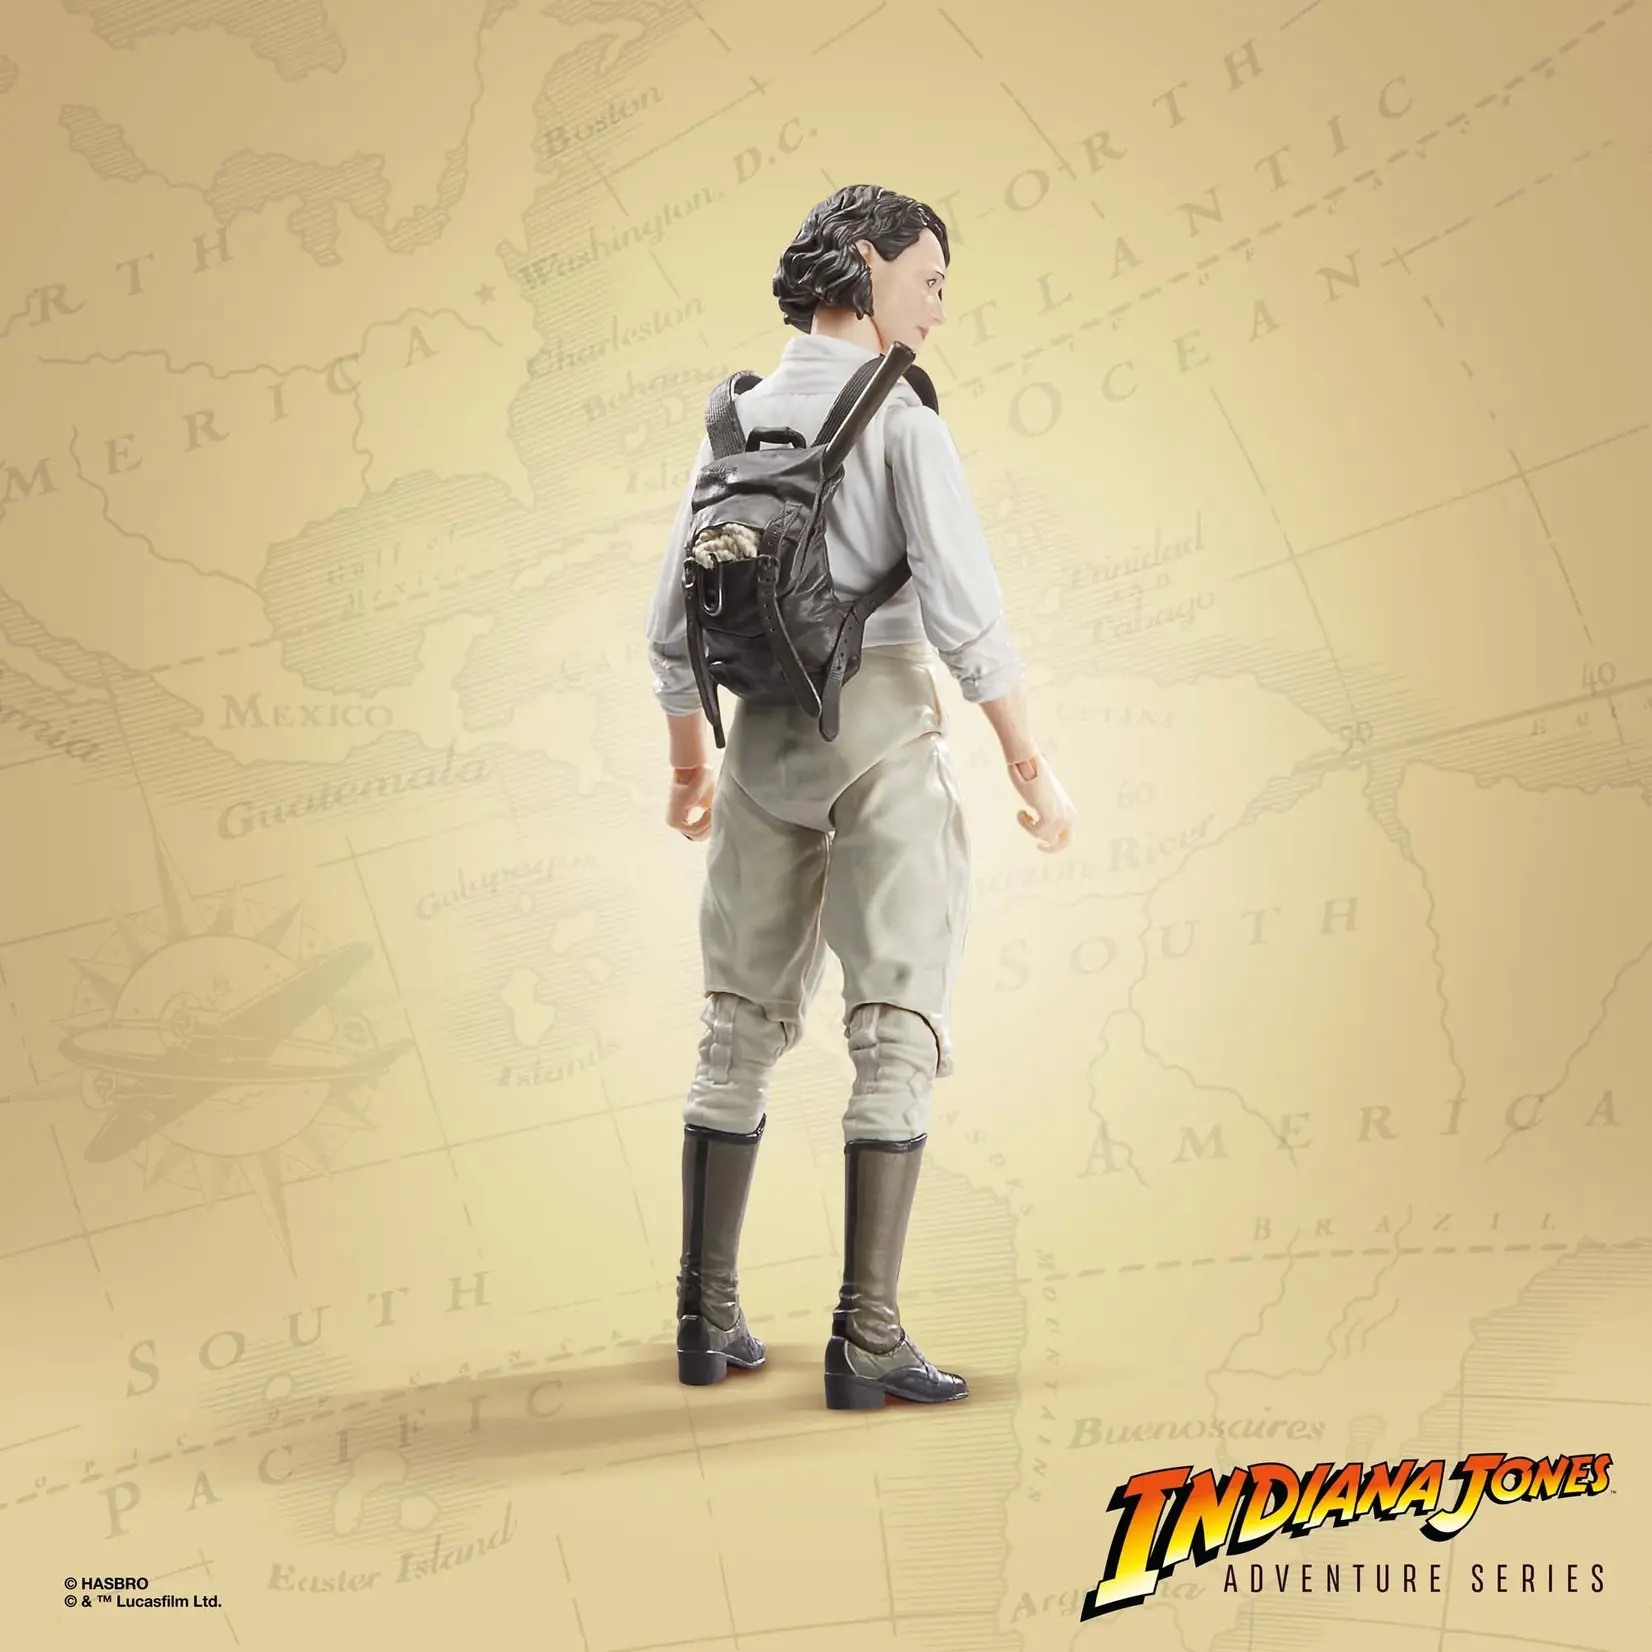 Hasbro Hasbro Indiana Jones and the Dial of Desitny Action Figure Helena Shaw 15,2 cm